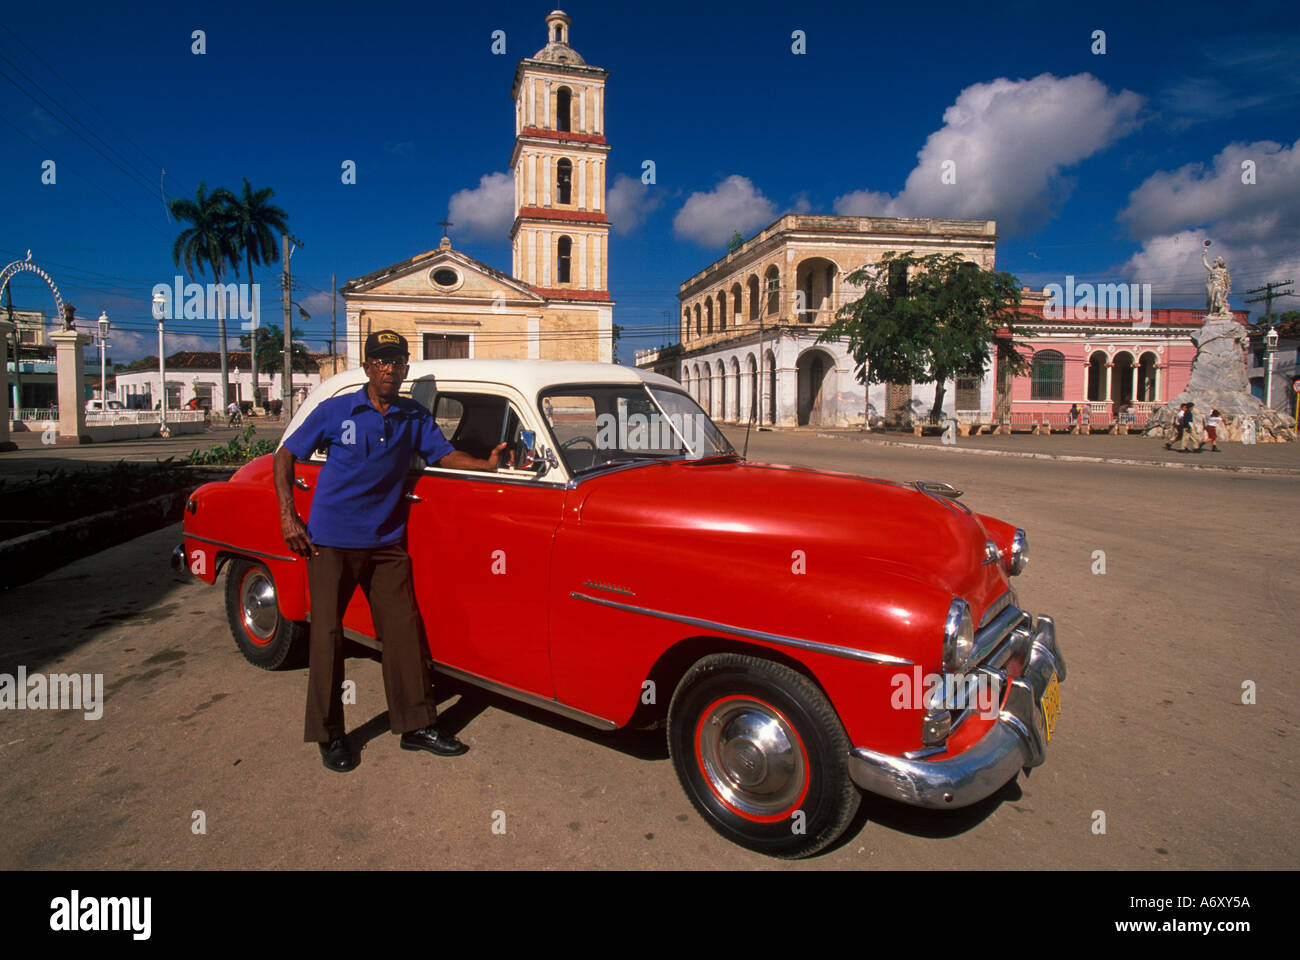 Taxi driver with classic 1951 Plymouth car, Parque Marti, Remedios, Cuba Stock Photo